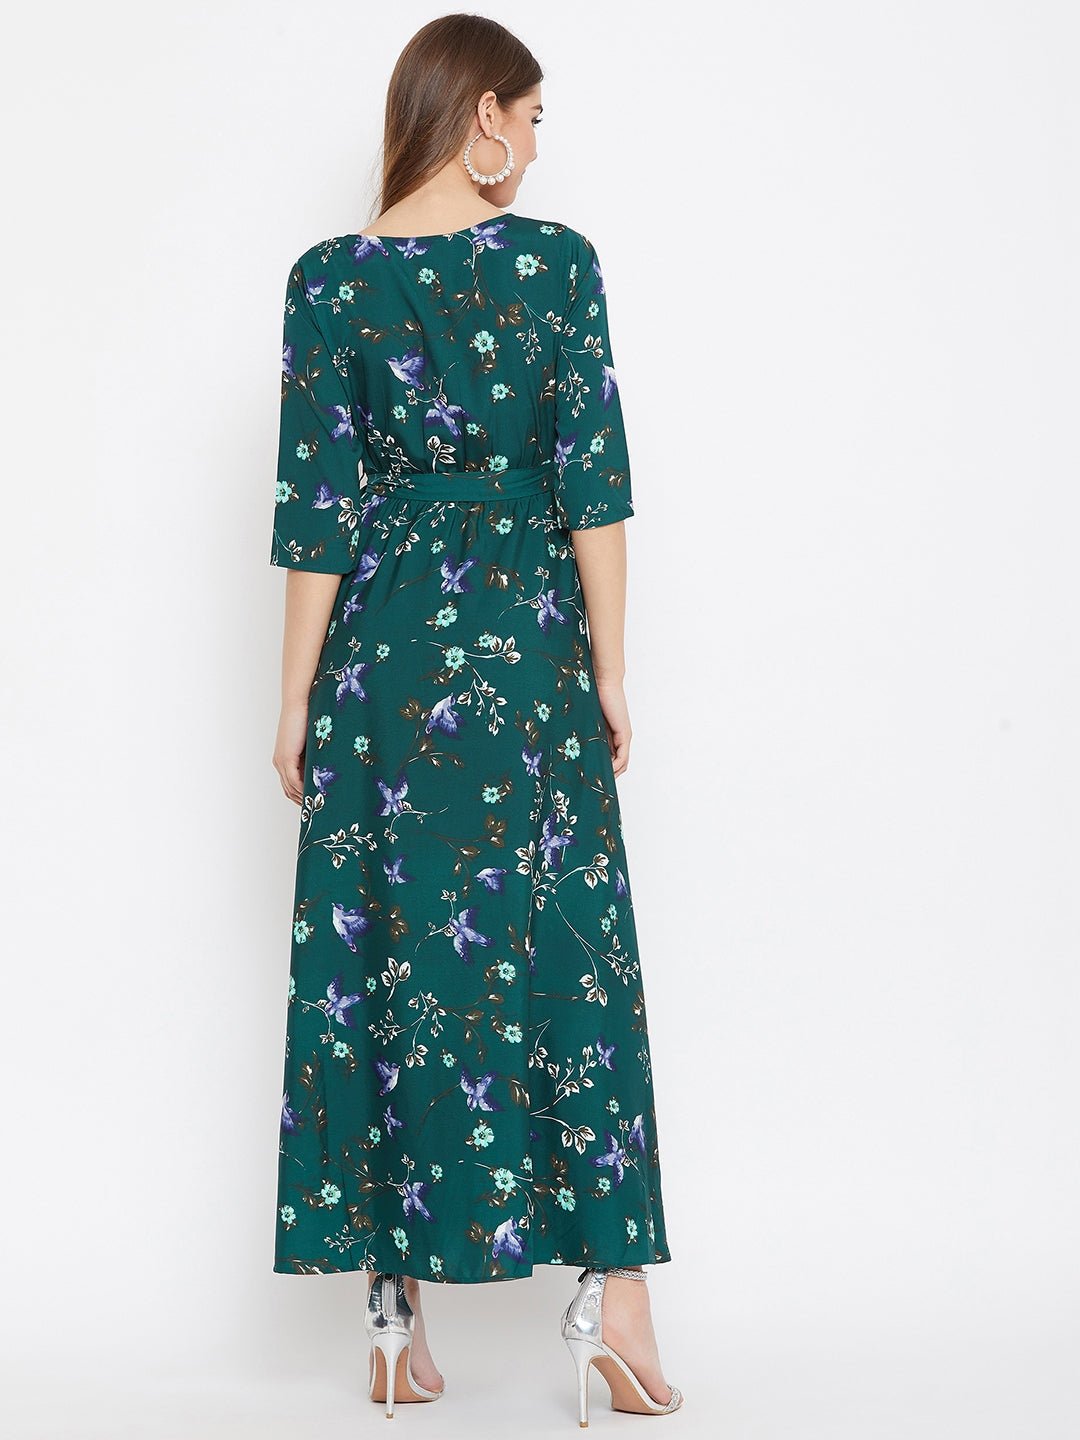 Folk Republic Women Green Floral Printed V-Neck A-Line Maxi Dress - #folk republic#